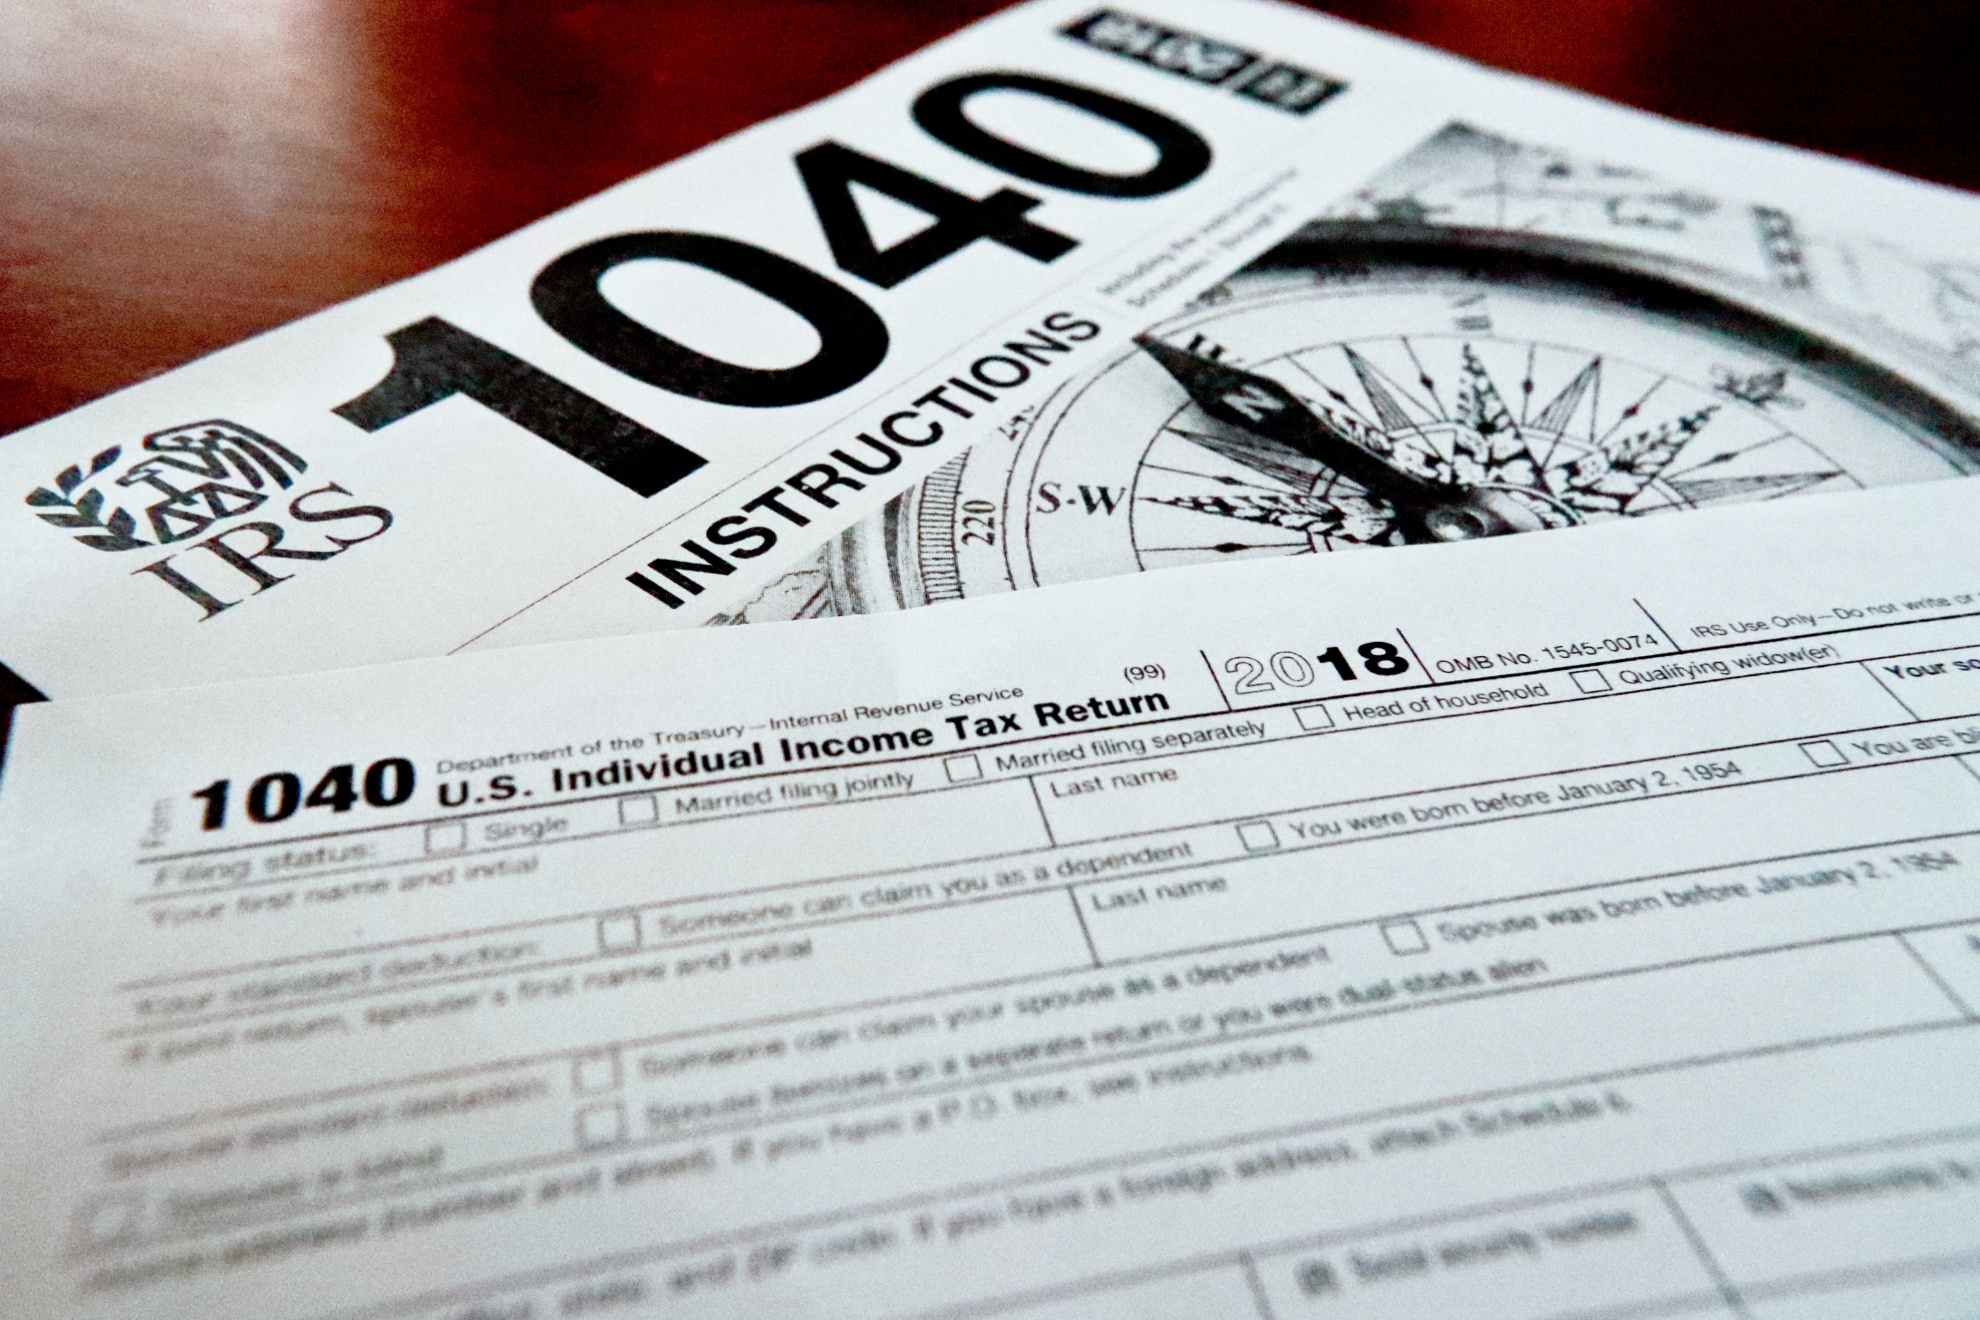 Internal Revenue Service taxes forms.